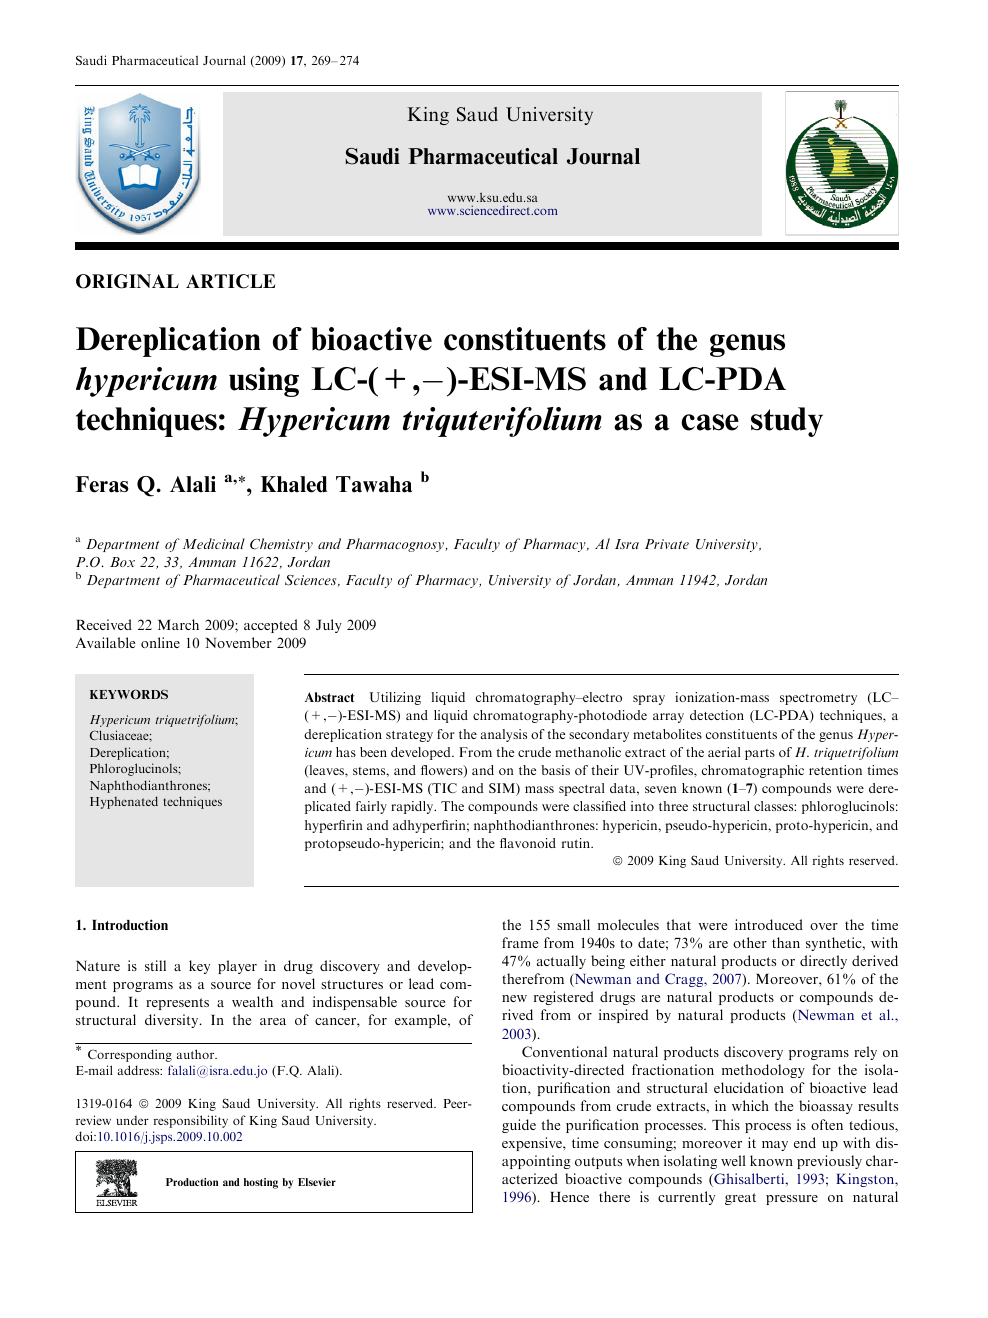 Dereplication Of Bioactive Constituents Of The Genus Hypericum